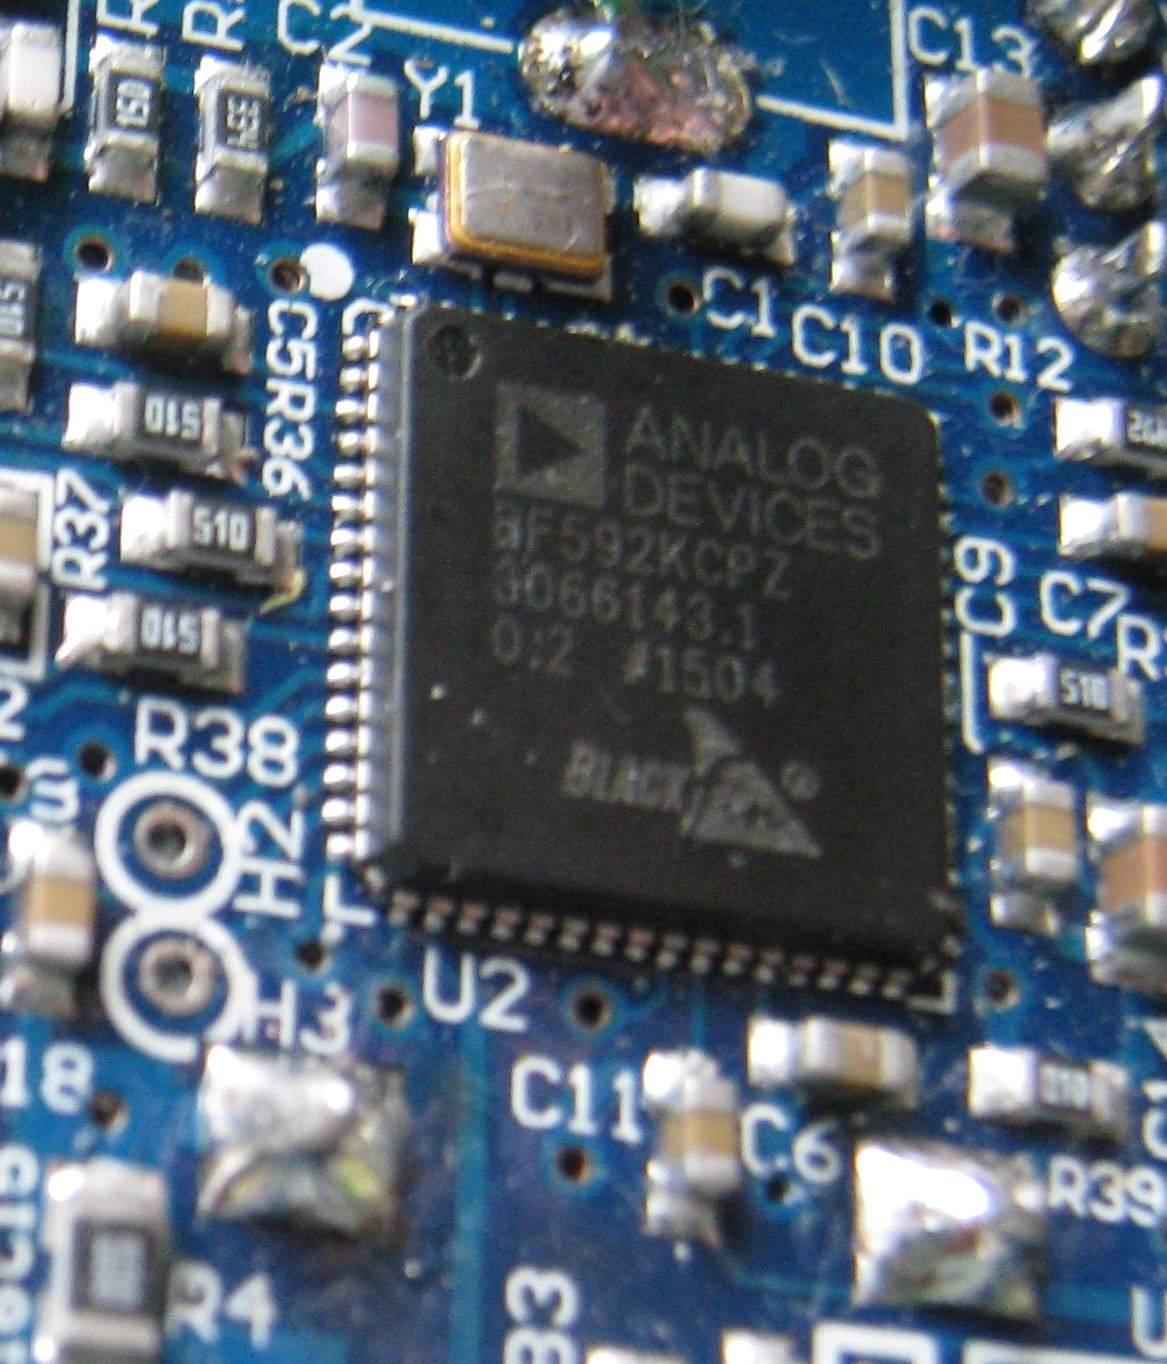 False Electronics: Electro-Harmonix Nano Pog